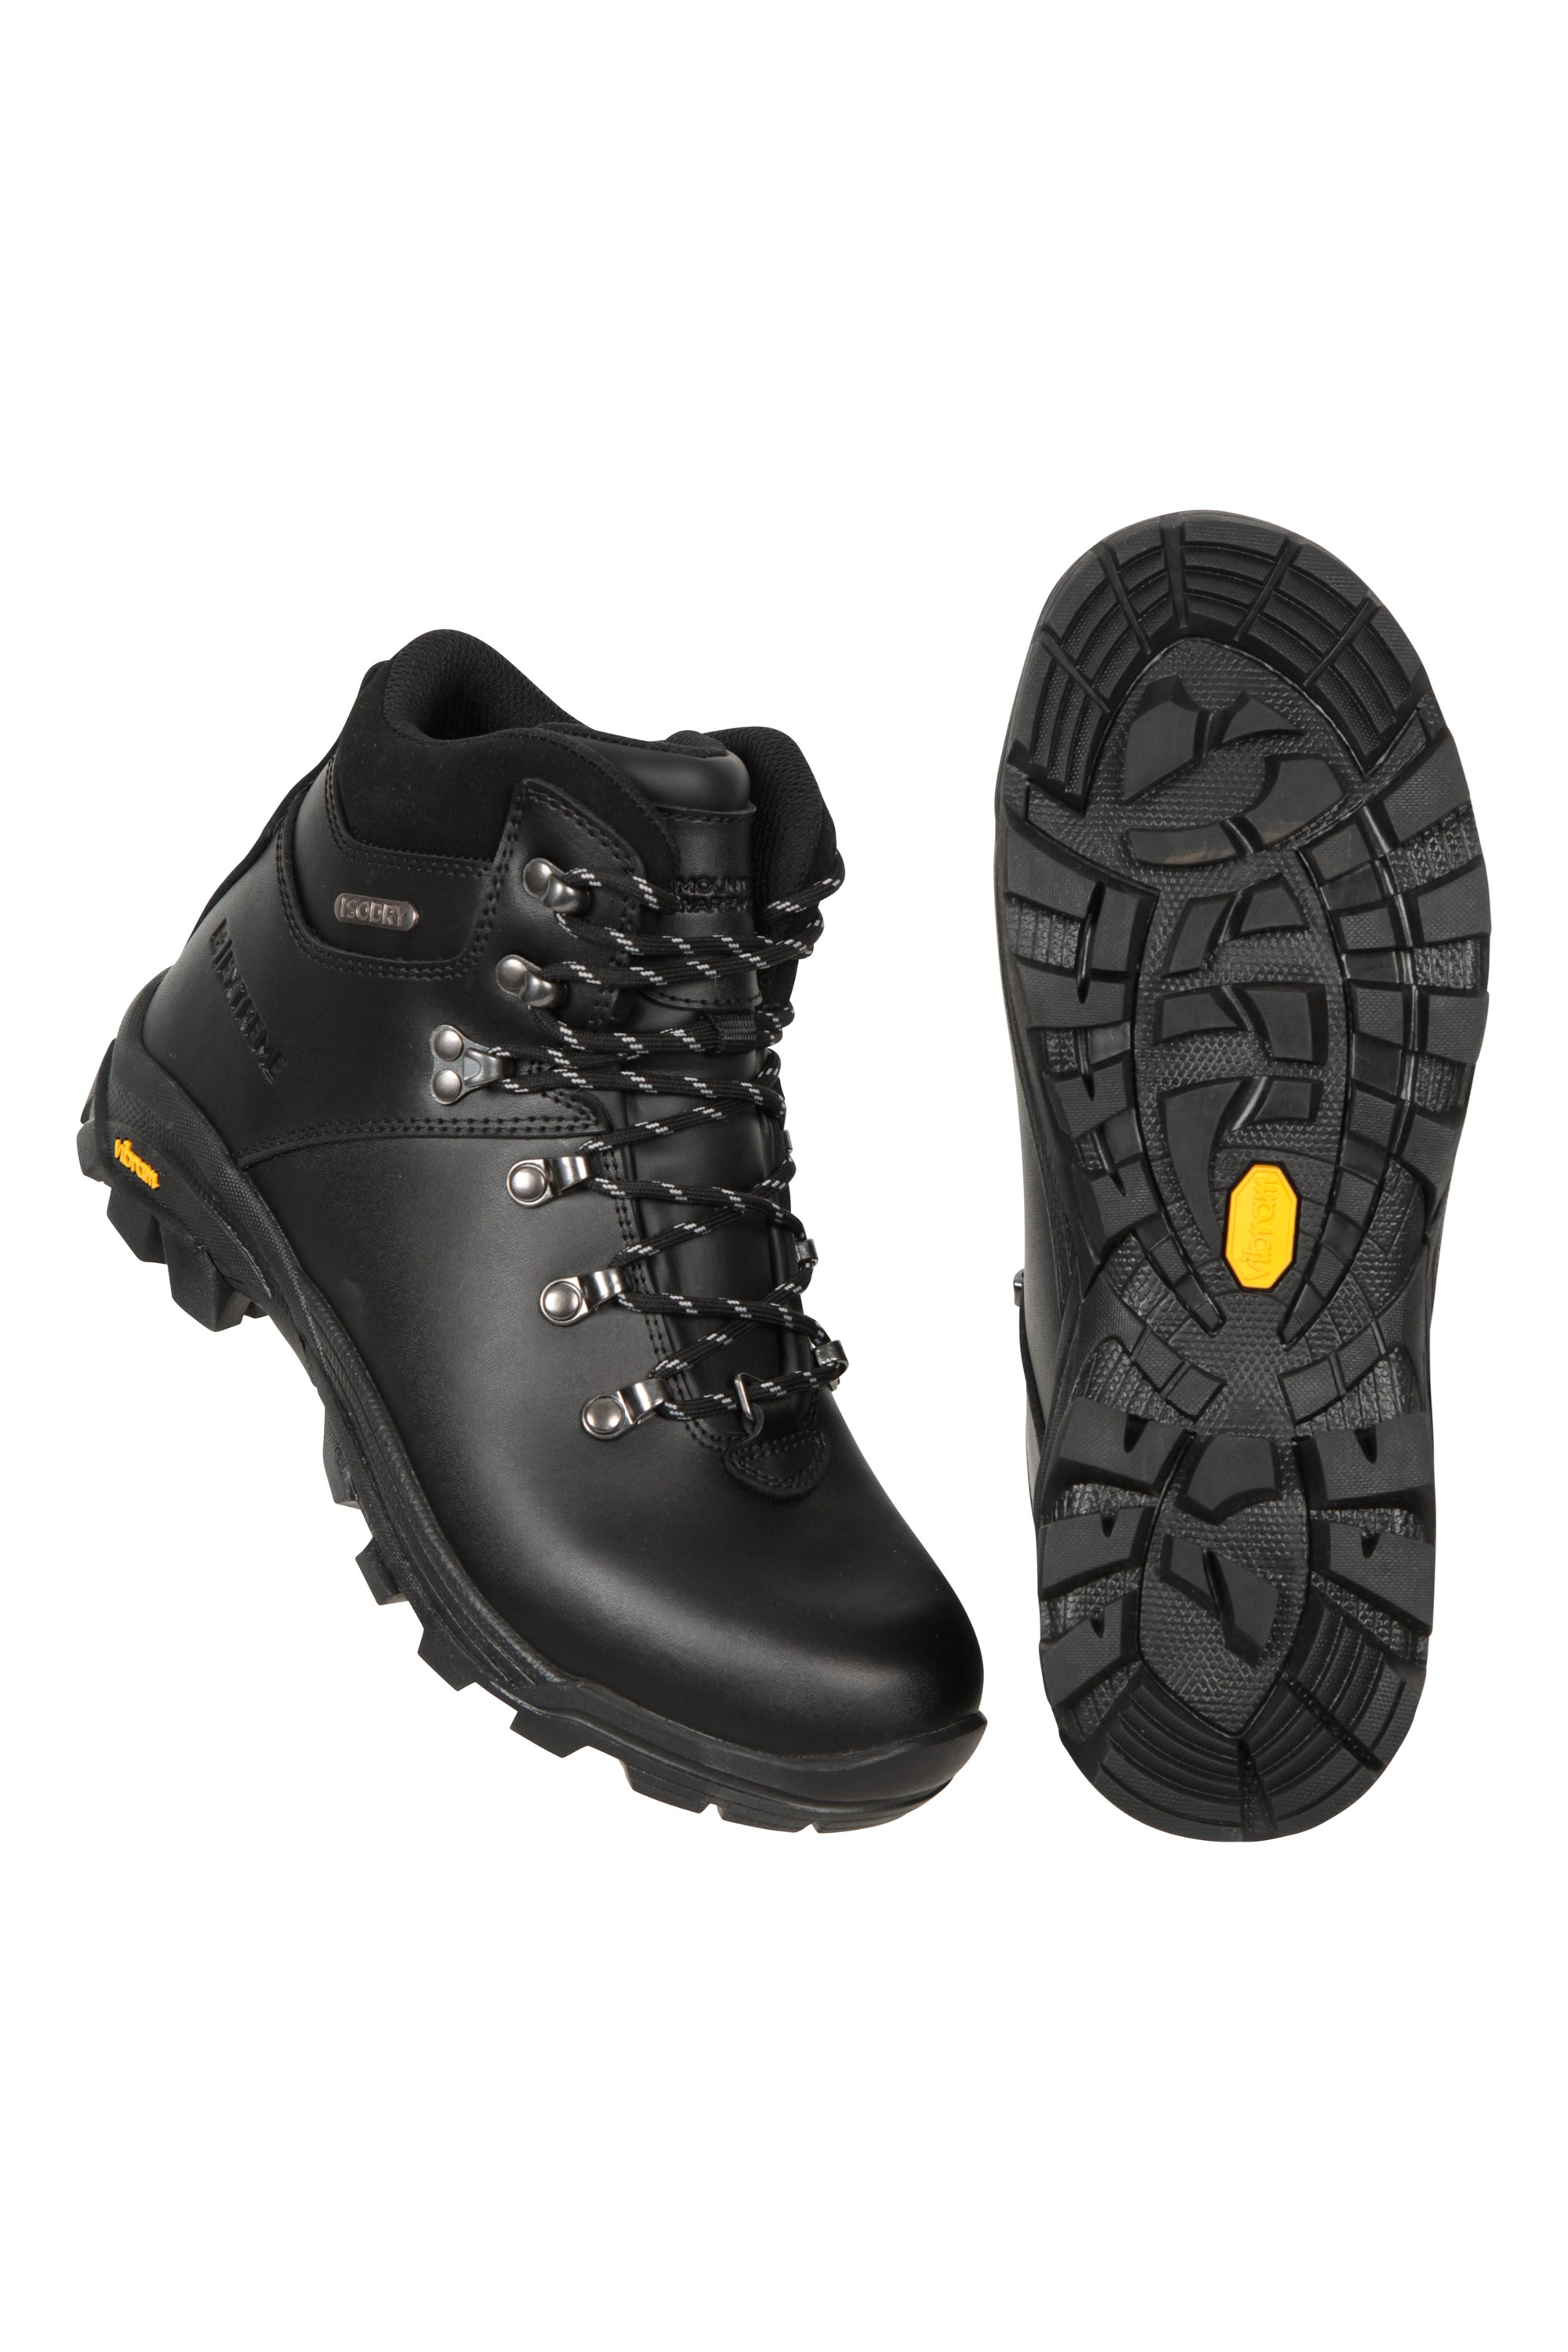 Latitude Extreme Womens Waterproof Vibram Walking Boots - Black